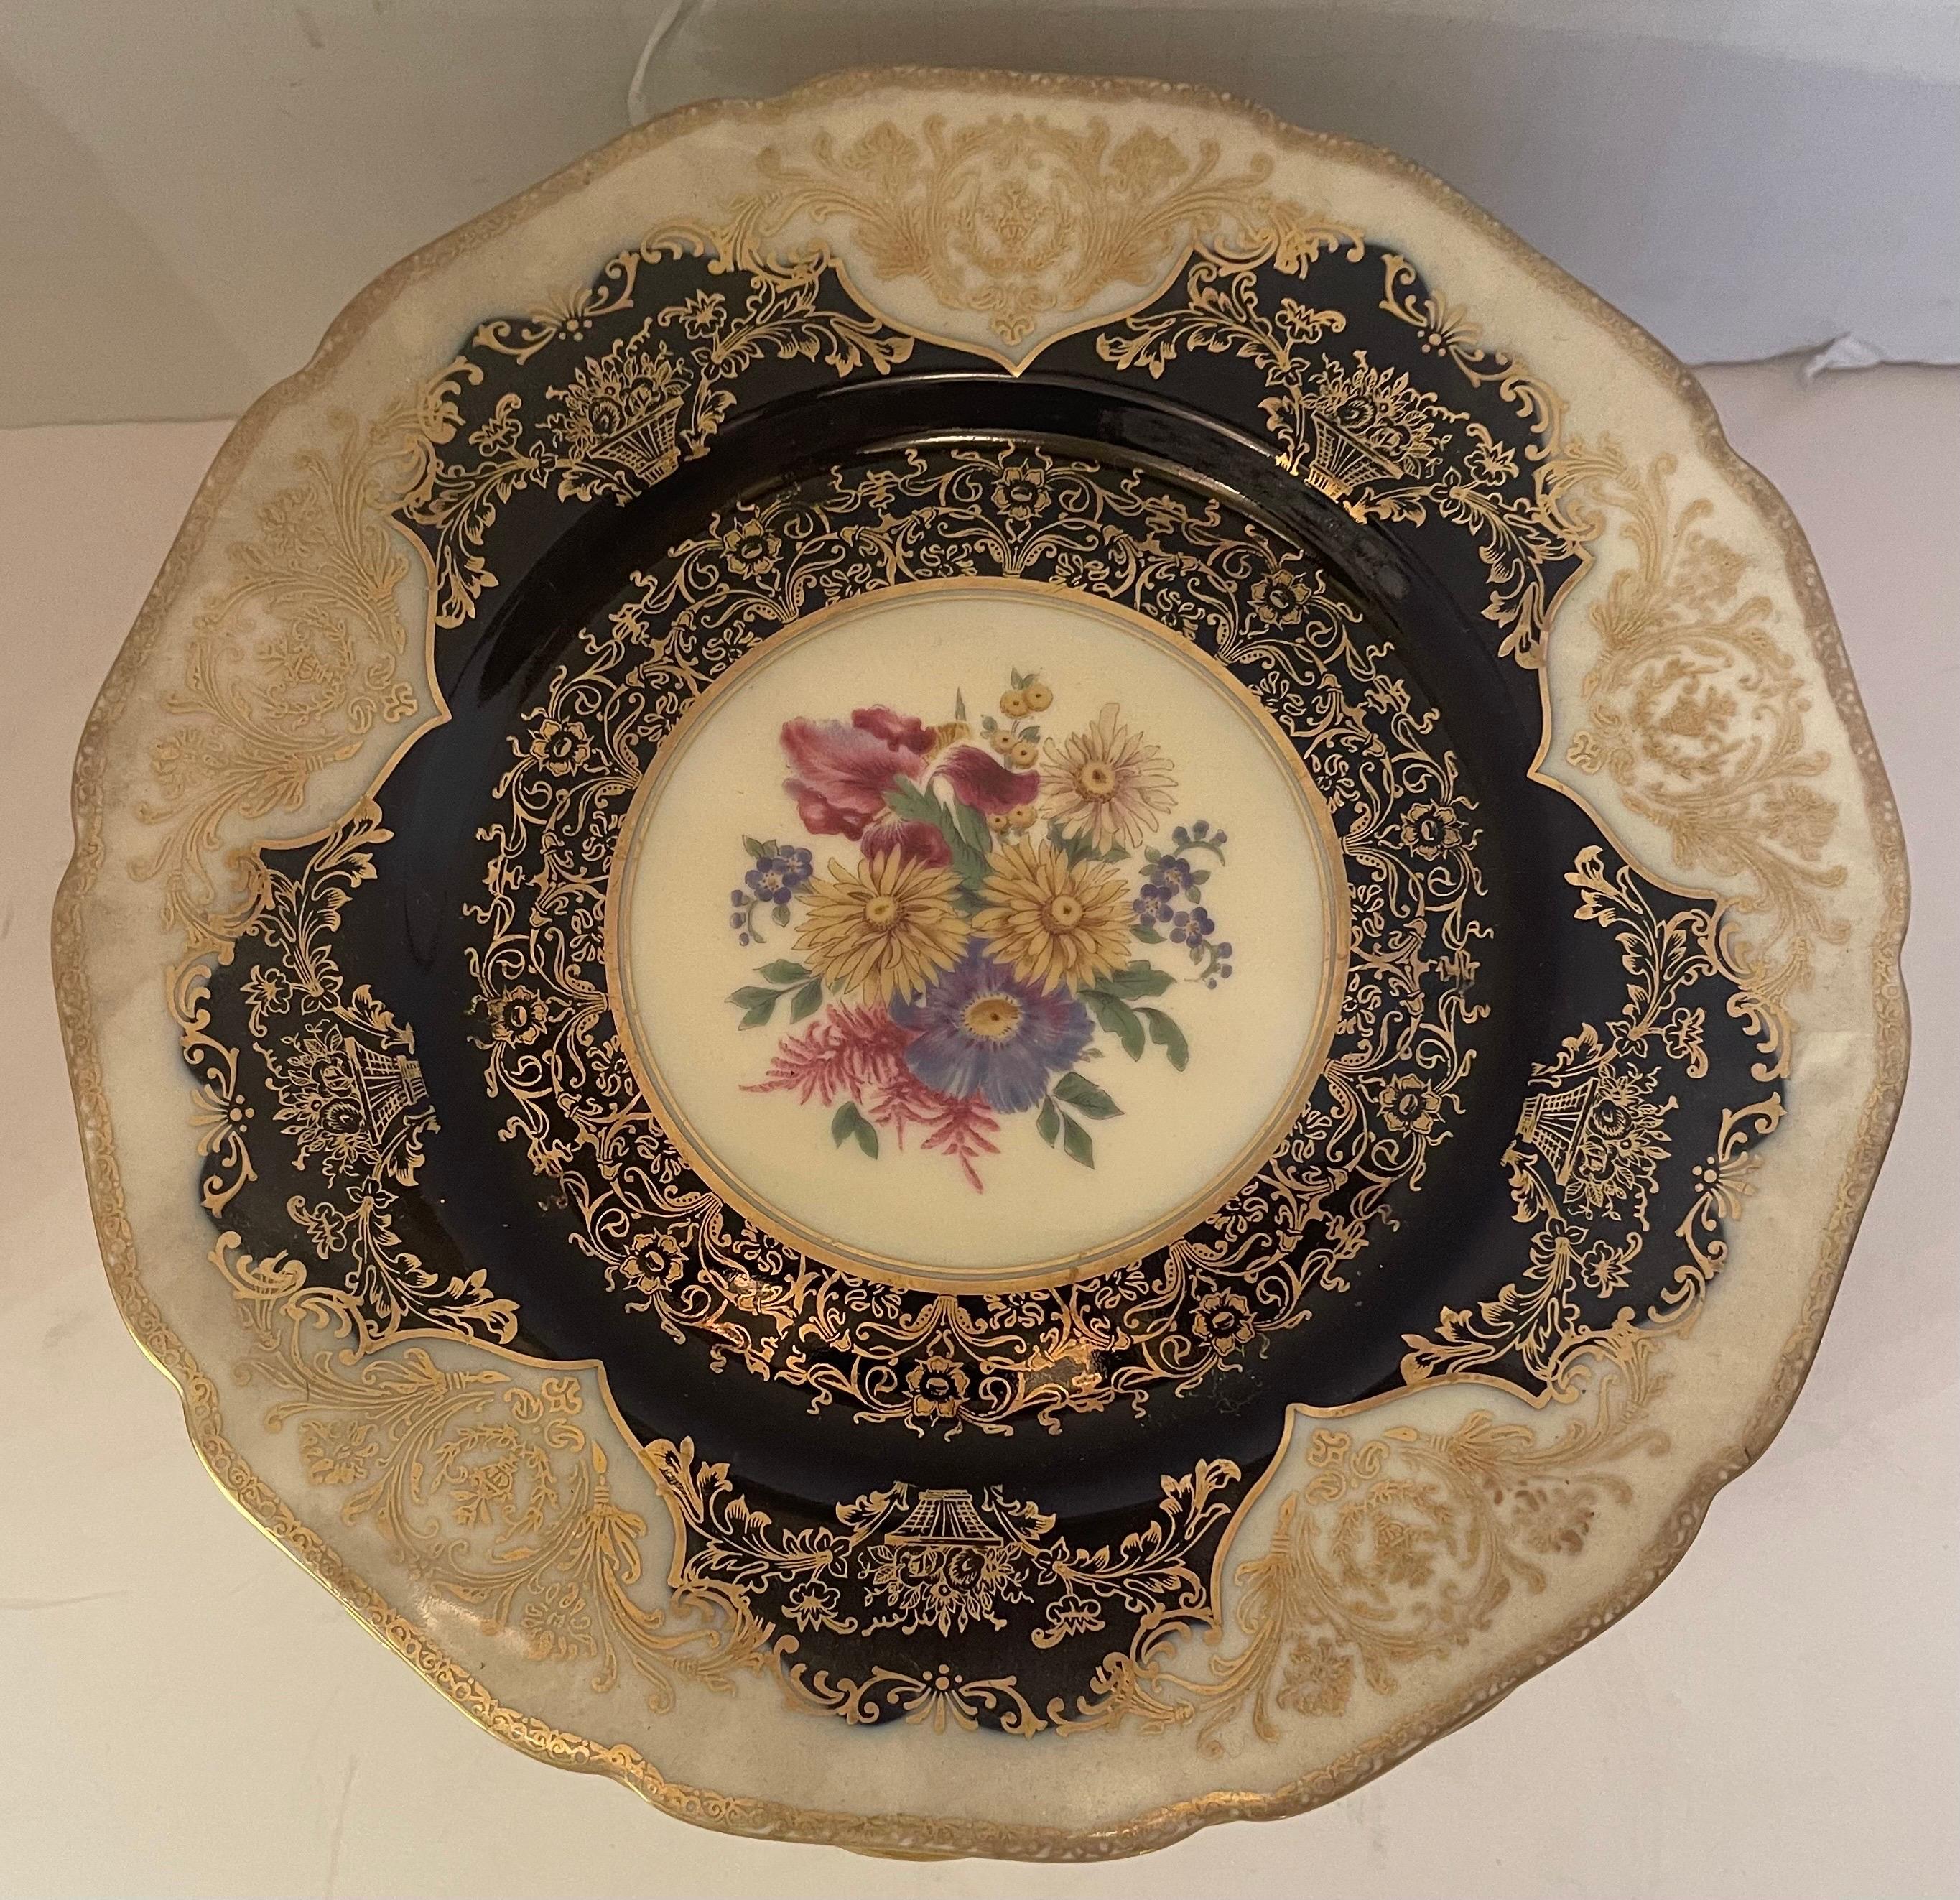 A Wonderful Floral Pattern Service 12 Dinner Porcelain Plates By Black Night Bavaria
